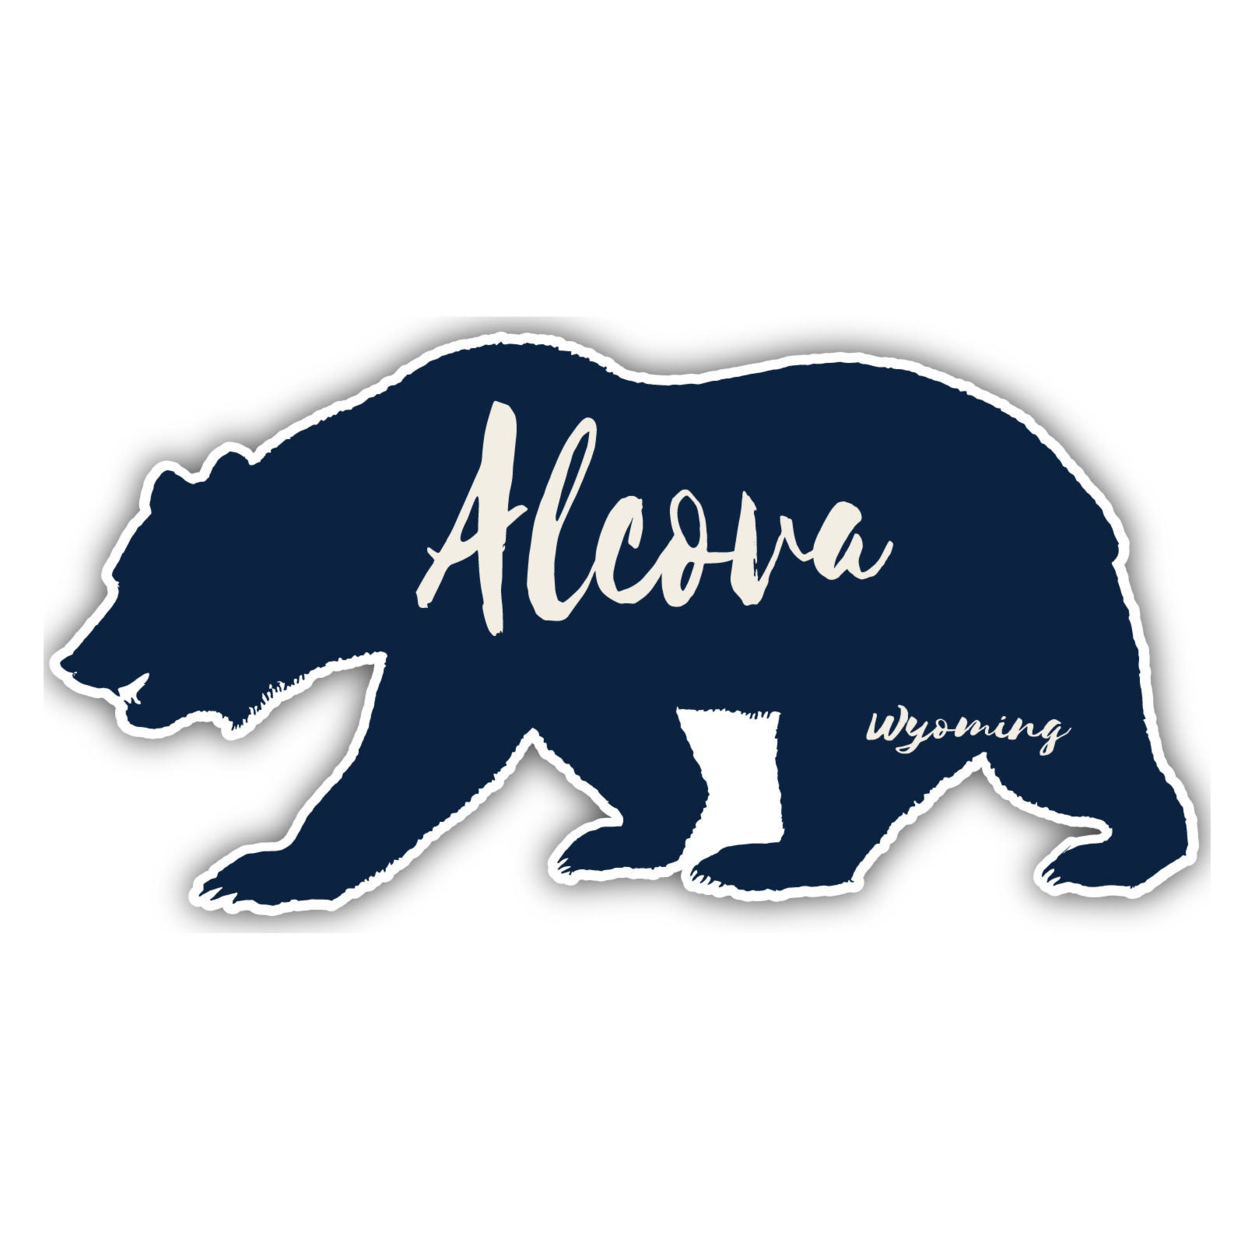 Alcova Wyoming Souvenir Decorative Stickers (Choose Theme And Size) - Single Unit, 6-Inch, Tent